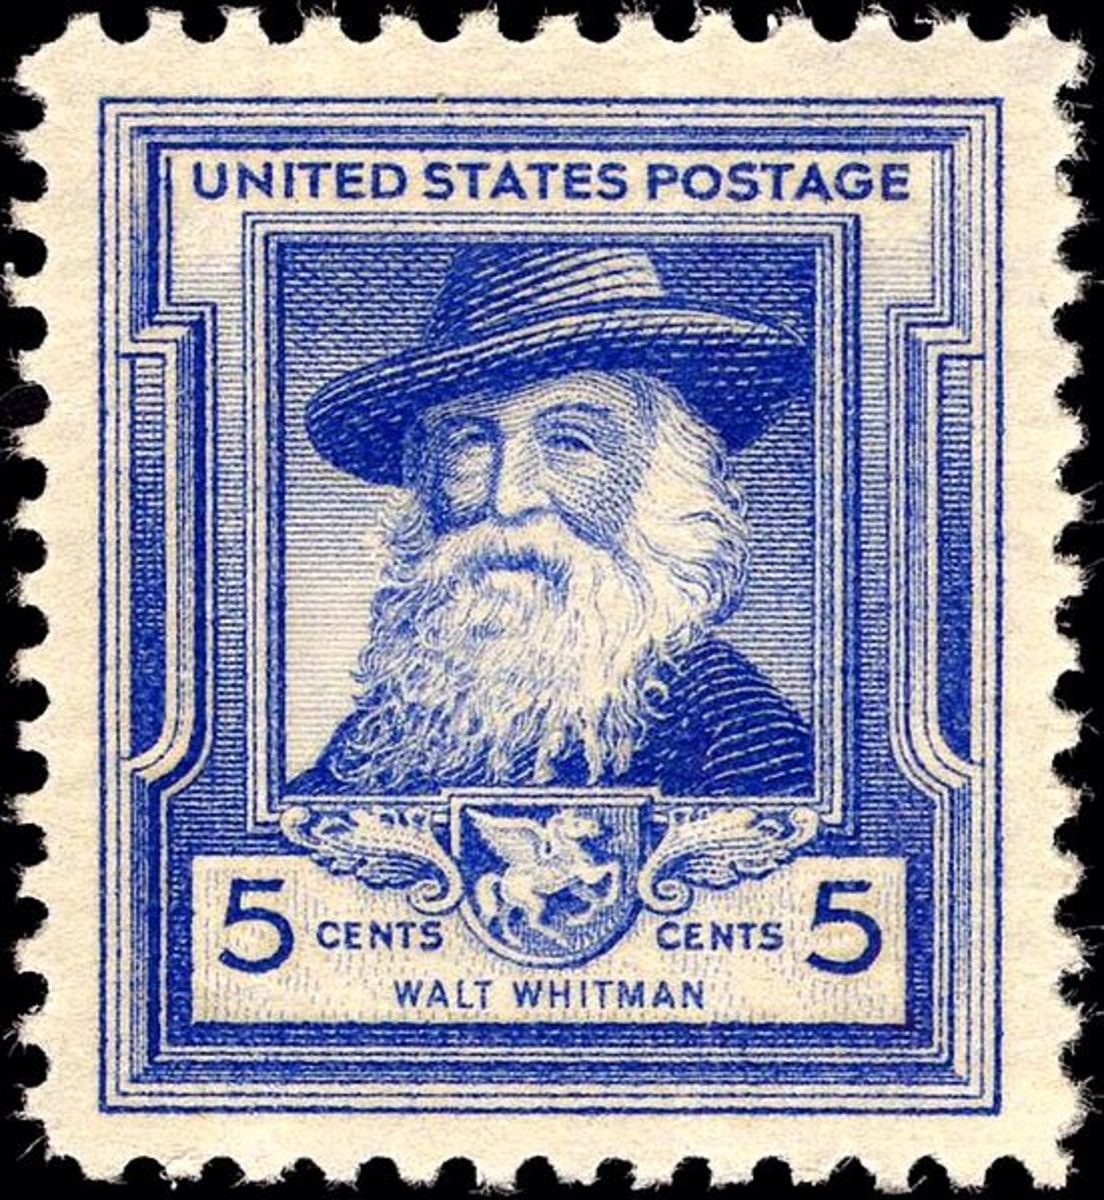  Commemorative Stamp -1940